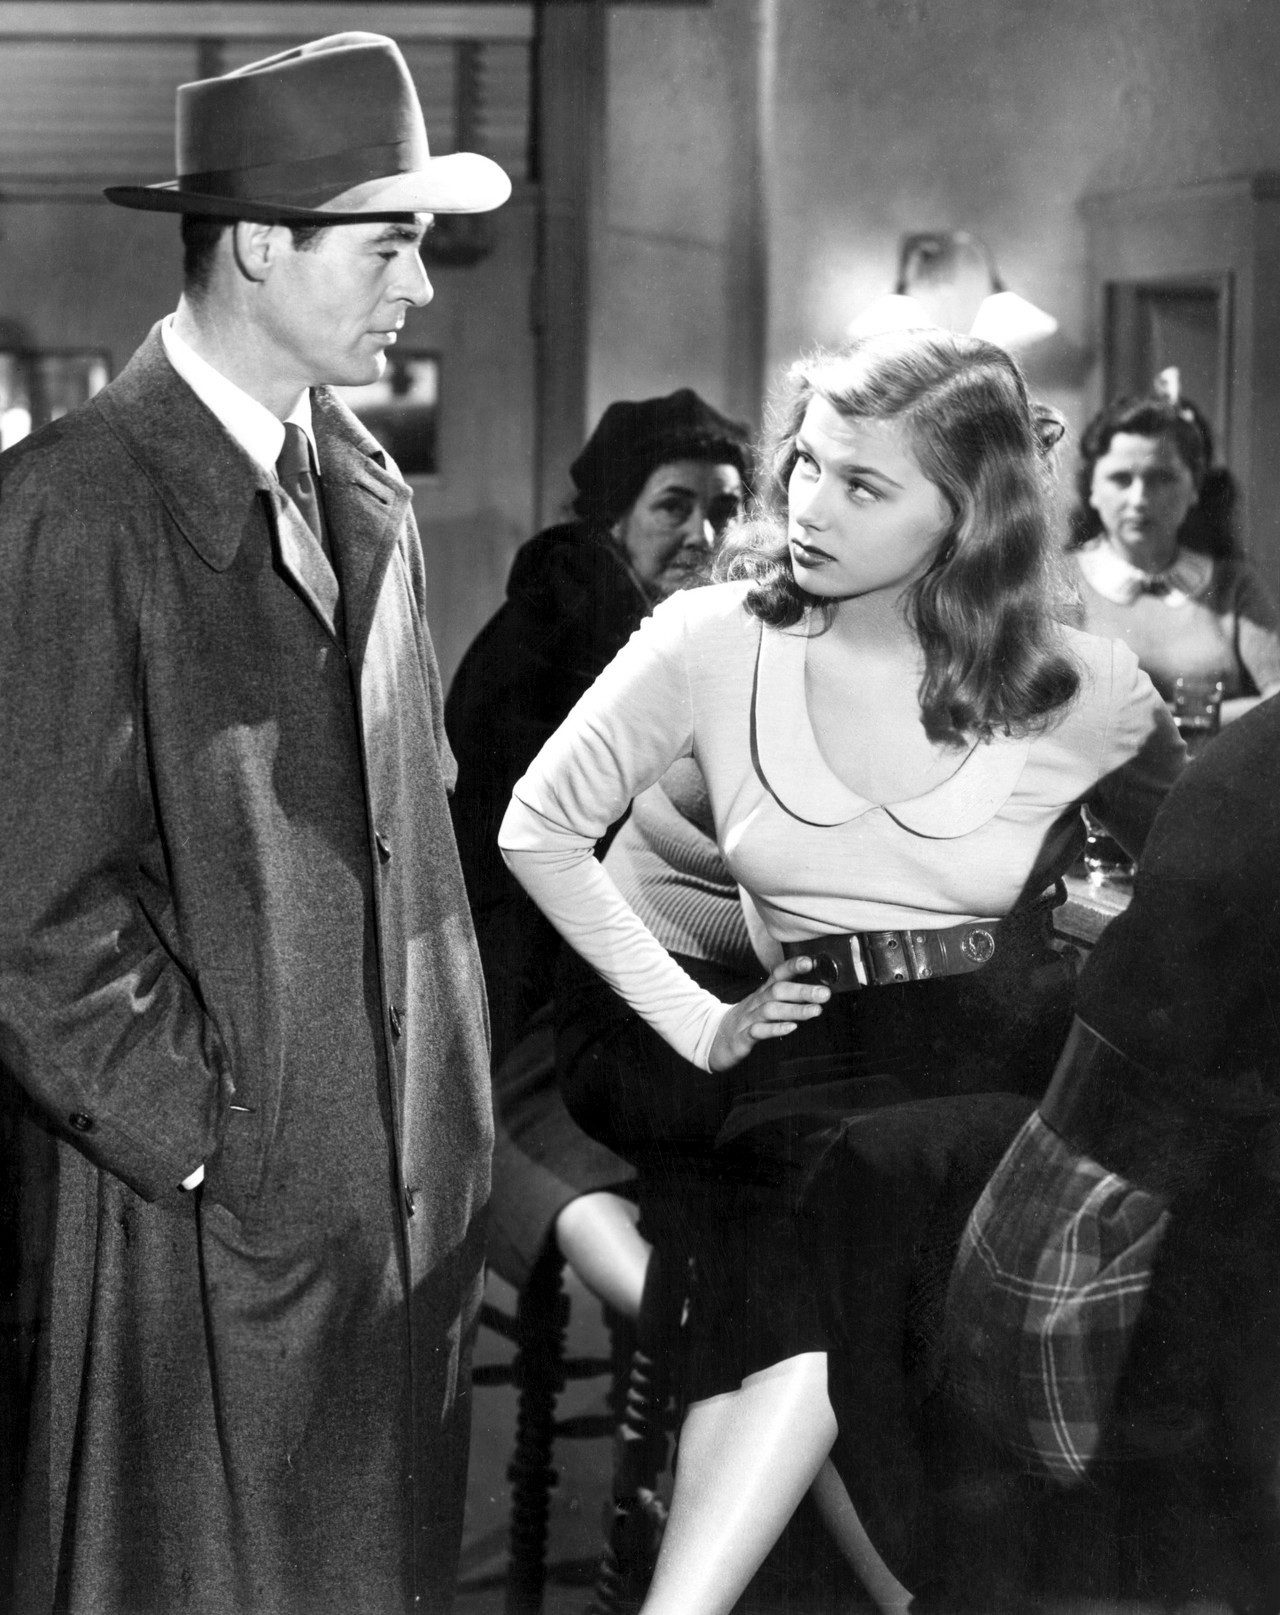 Robert Ryan and Nita Talbot in an film noir scene from "On Dangerous Ground" (1951)